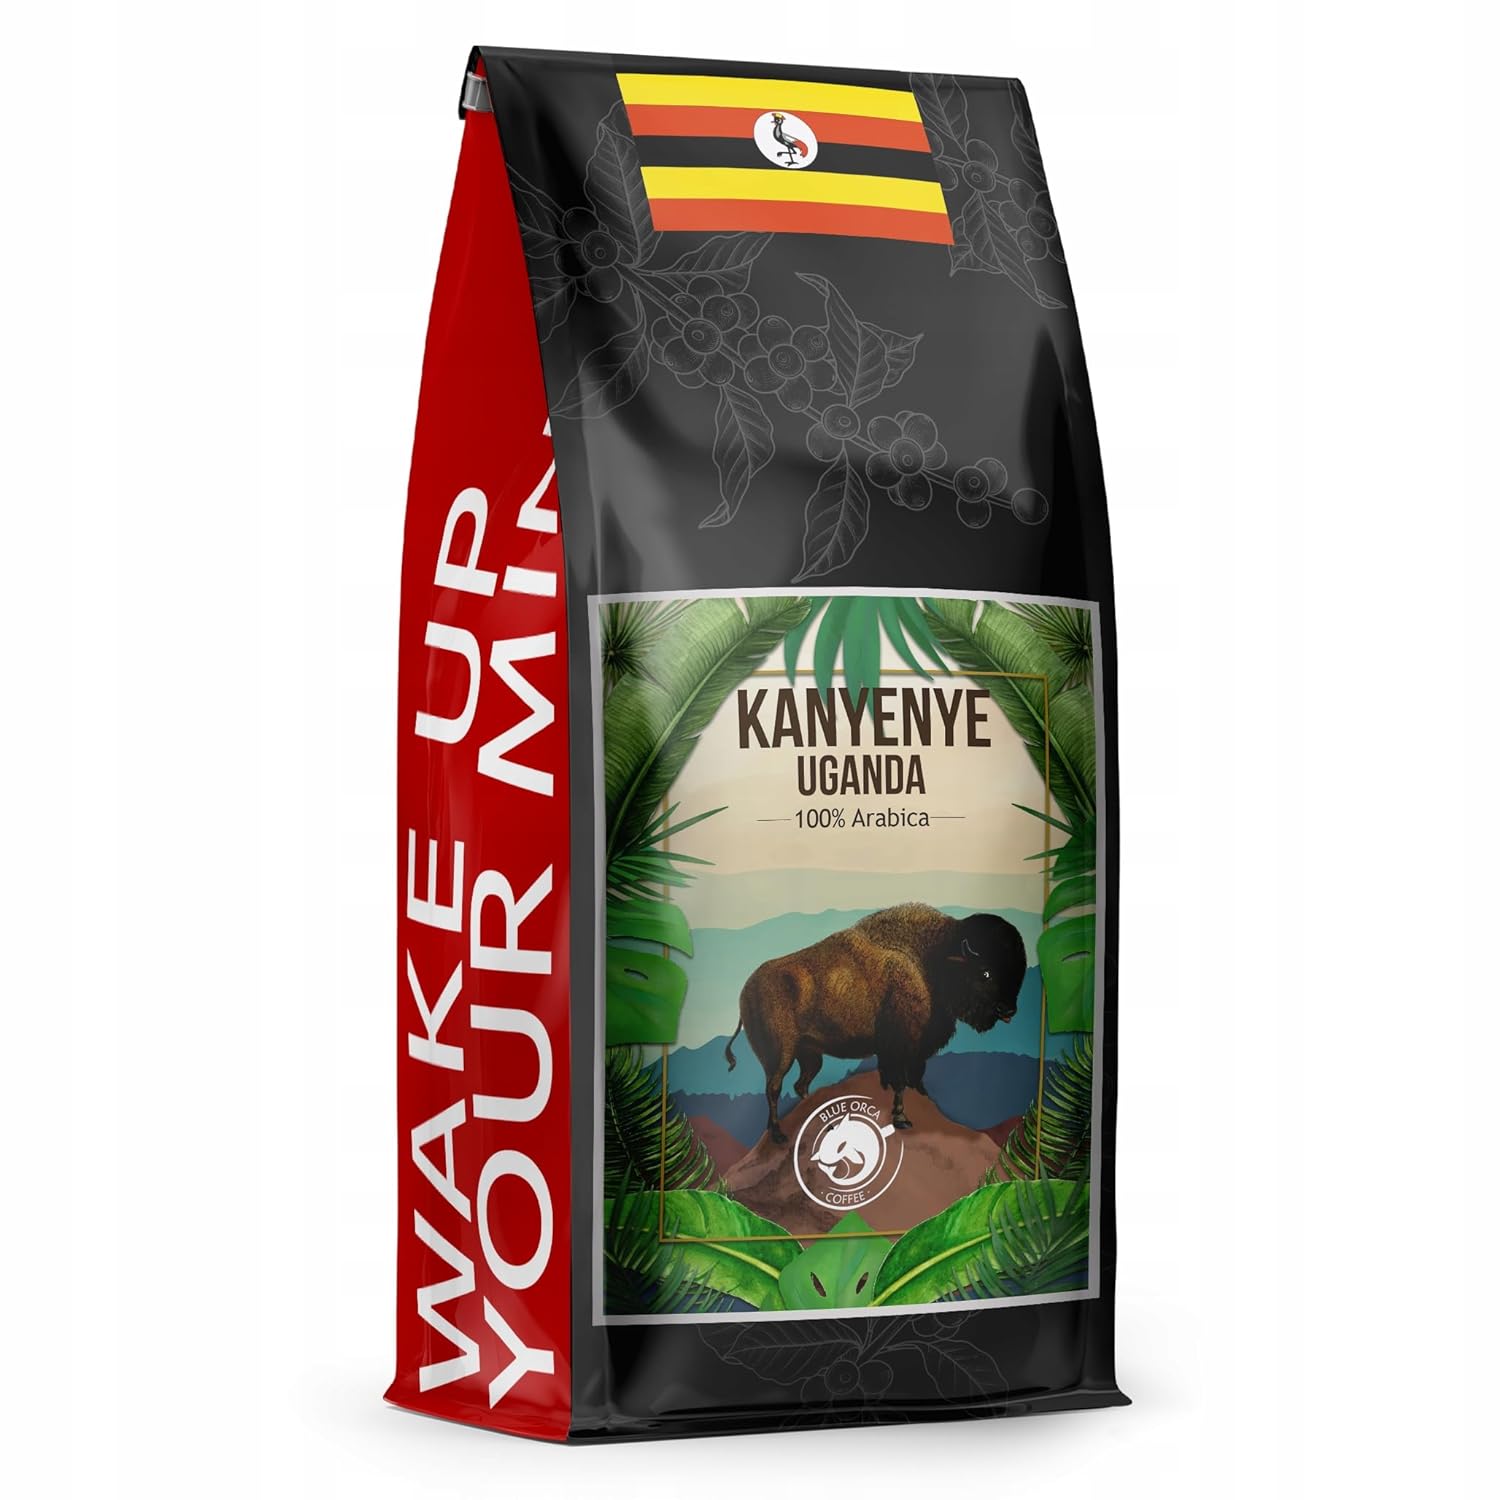 Blue Orca Coffee - UGANDA KANYENYE - Specialty Kaffeebohnen aus Uganda Kanyenye - Frisch geröstet - Single Origin - SCA 82.5 Punkte, 1 kg
